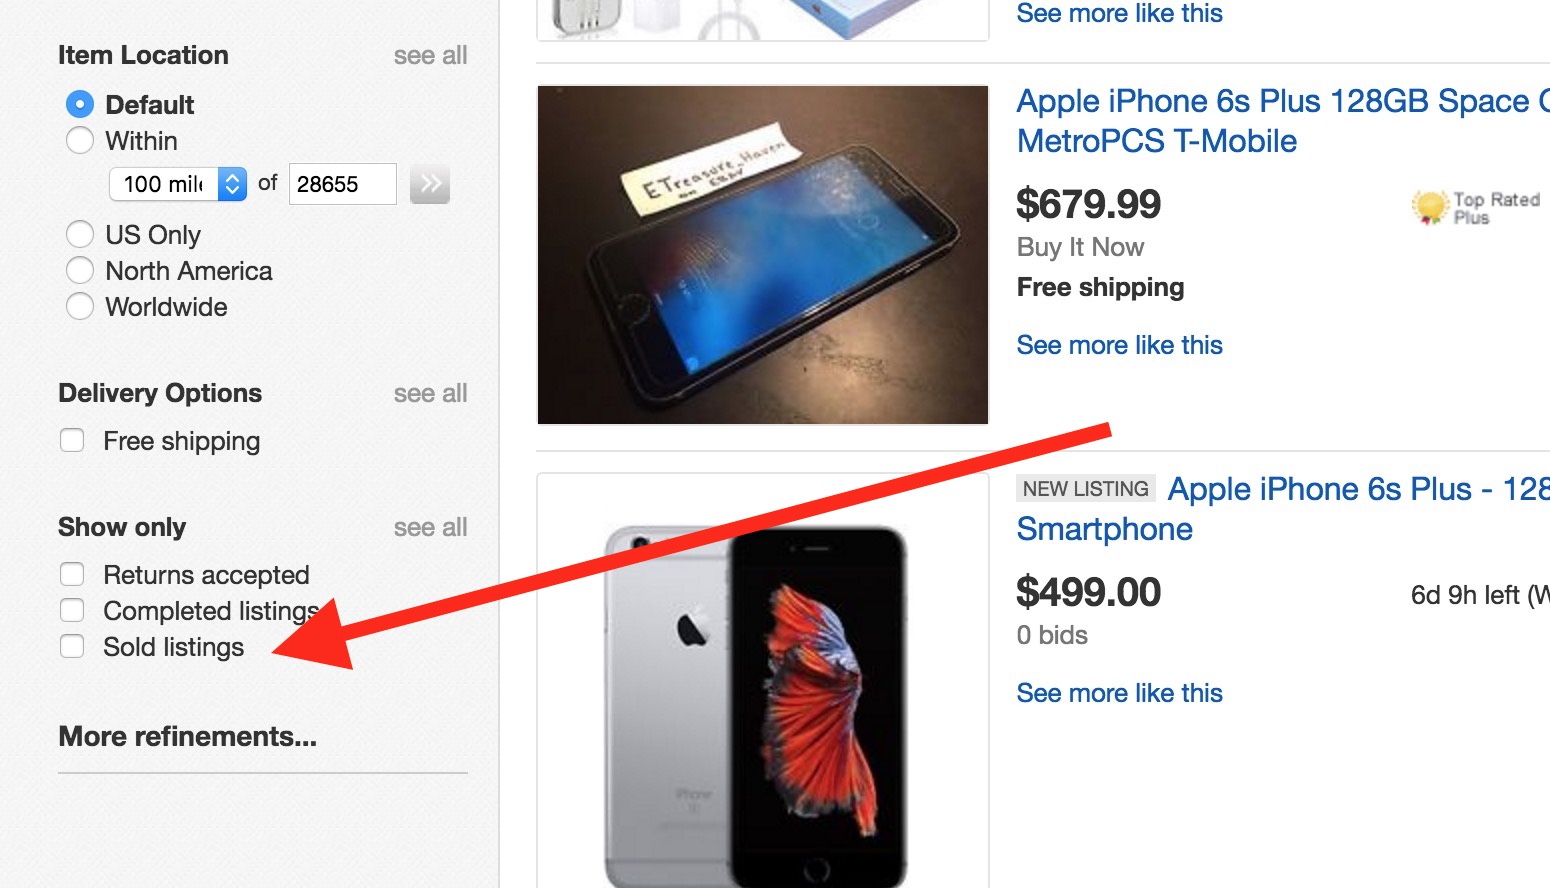 vende tu viejo iphone en ebay